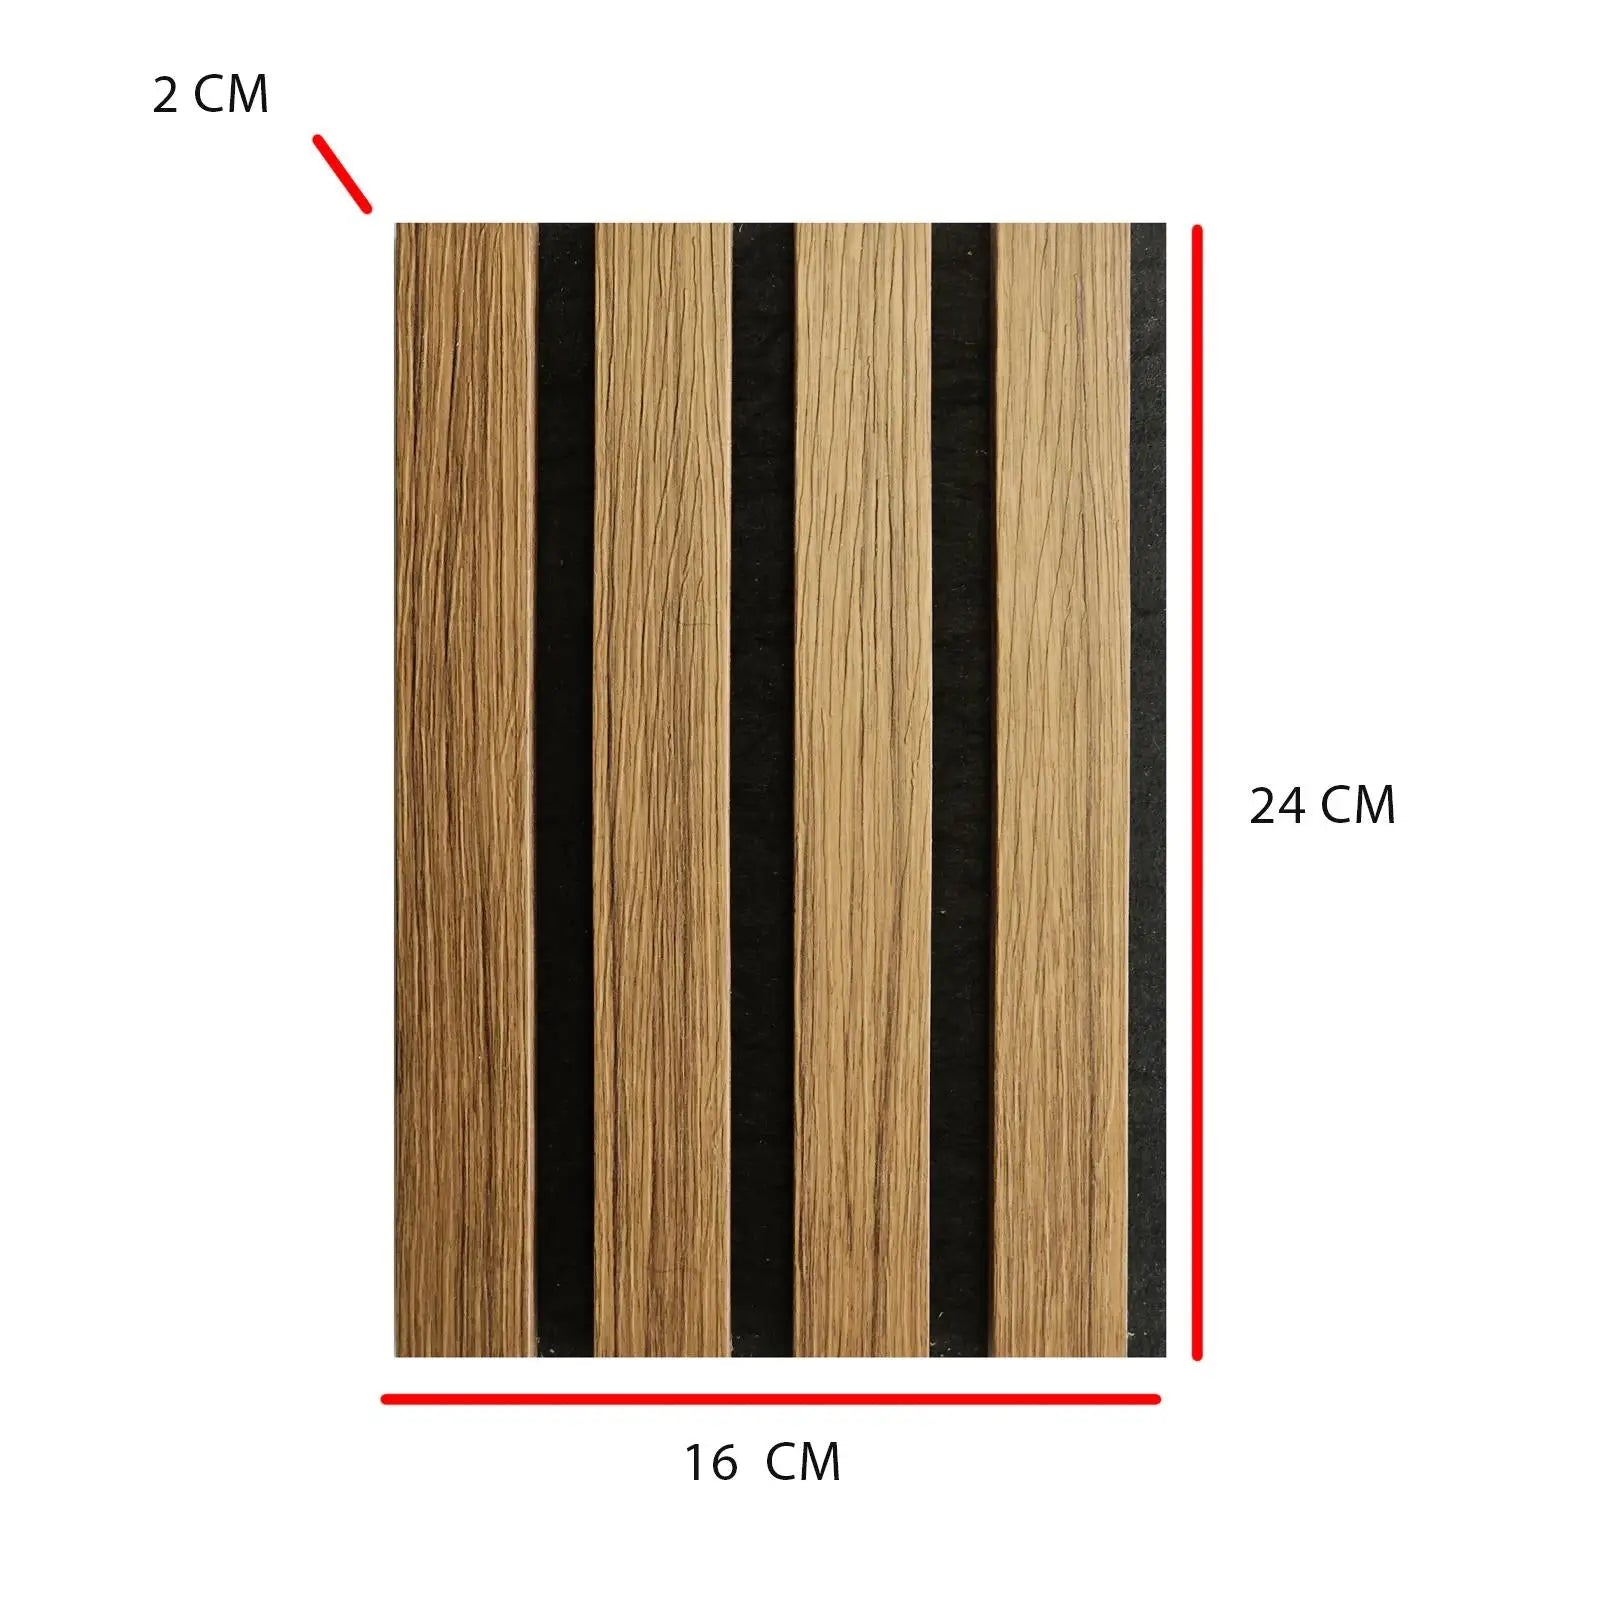 Acoustic Slat Wood Wall Panel - Walnut - SAMPLE